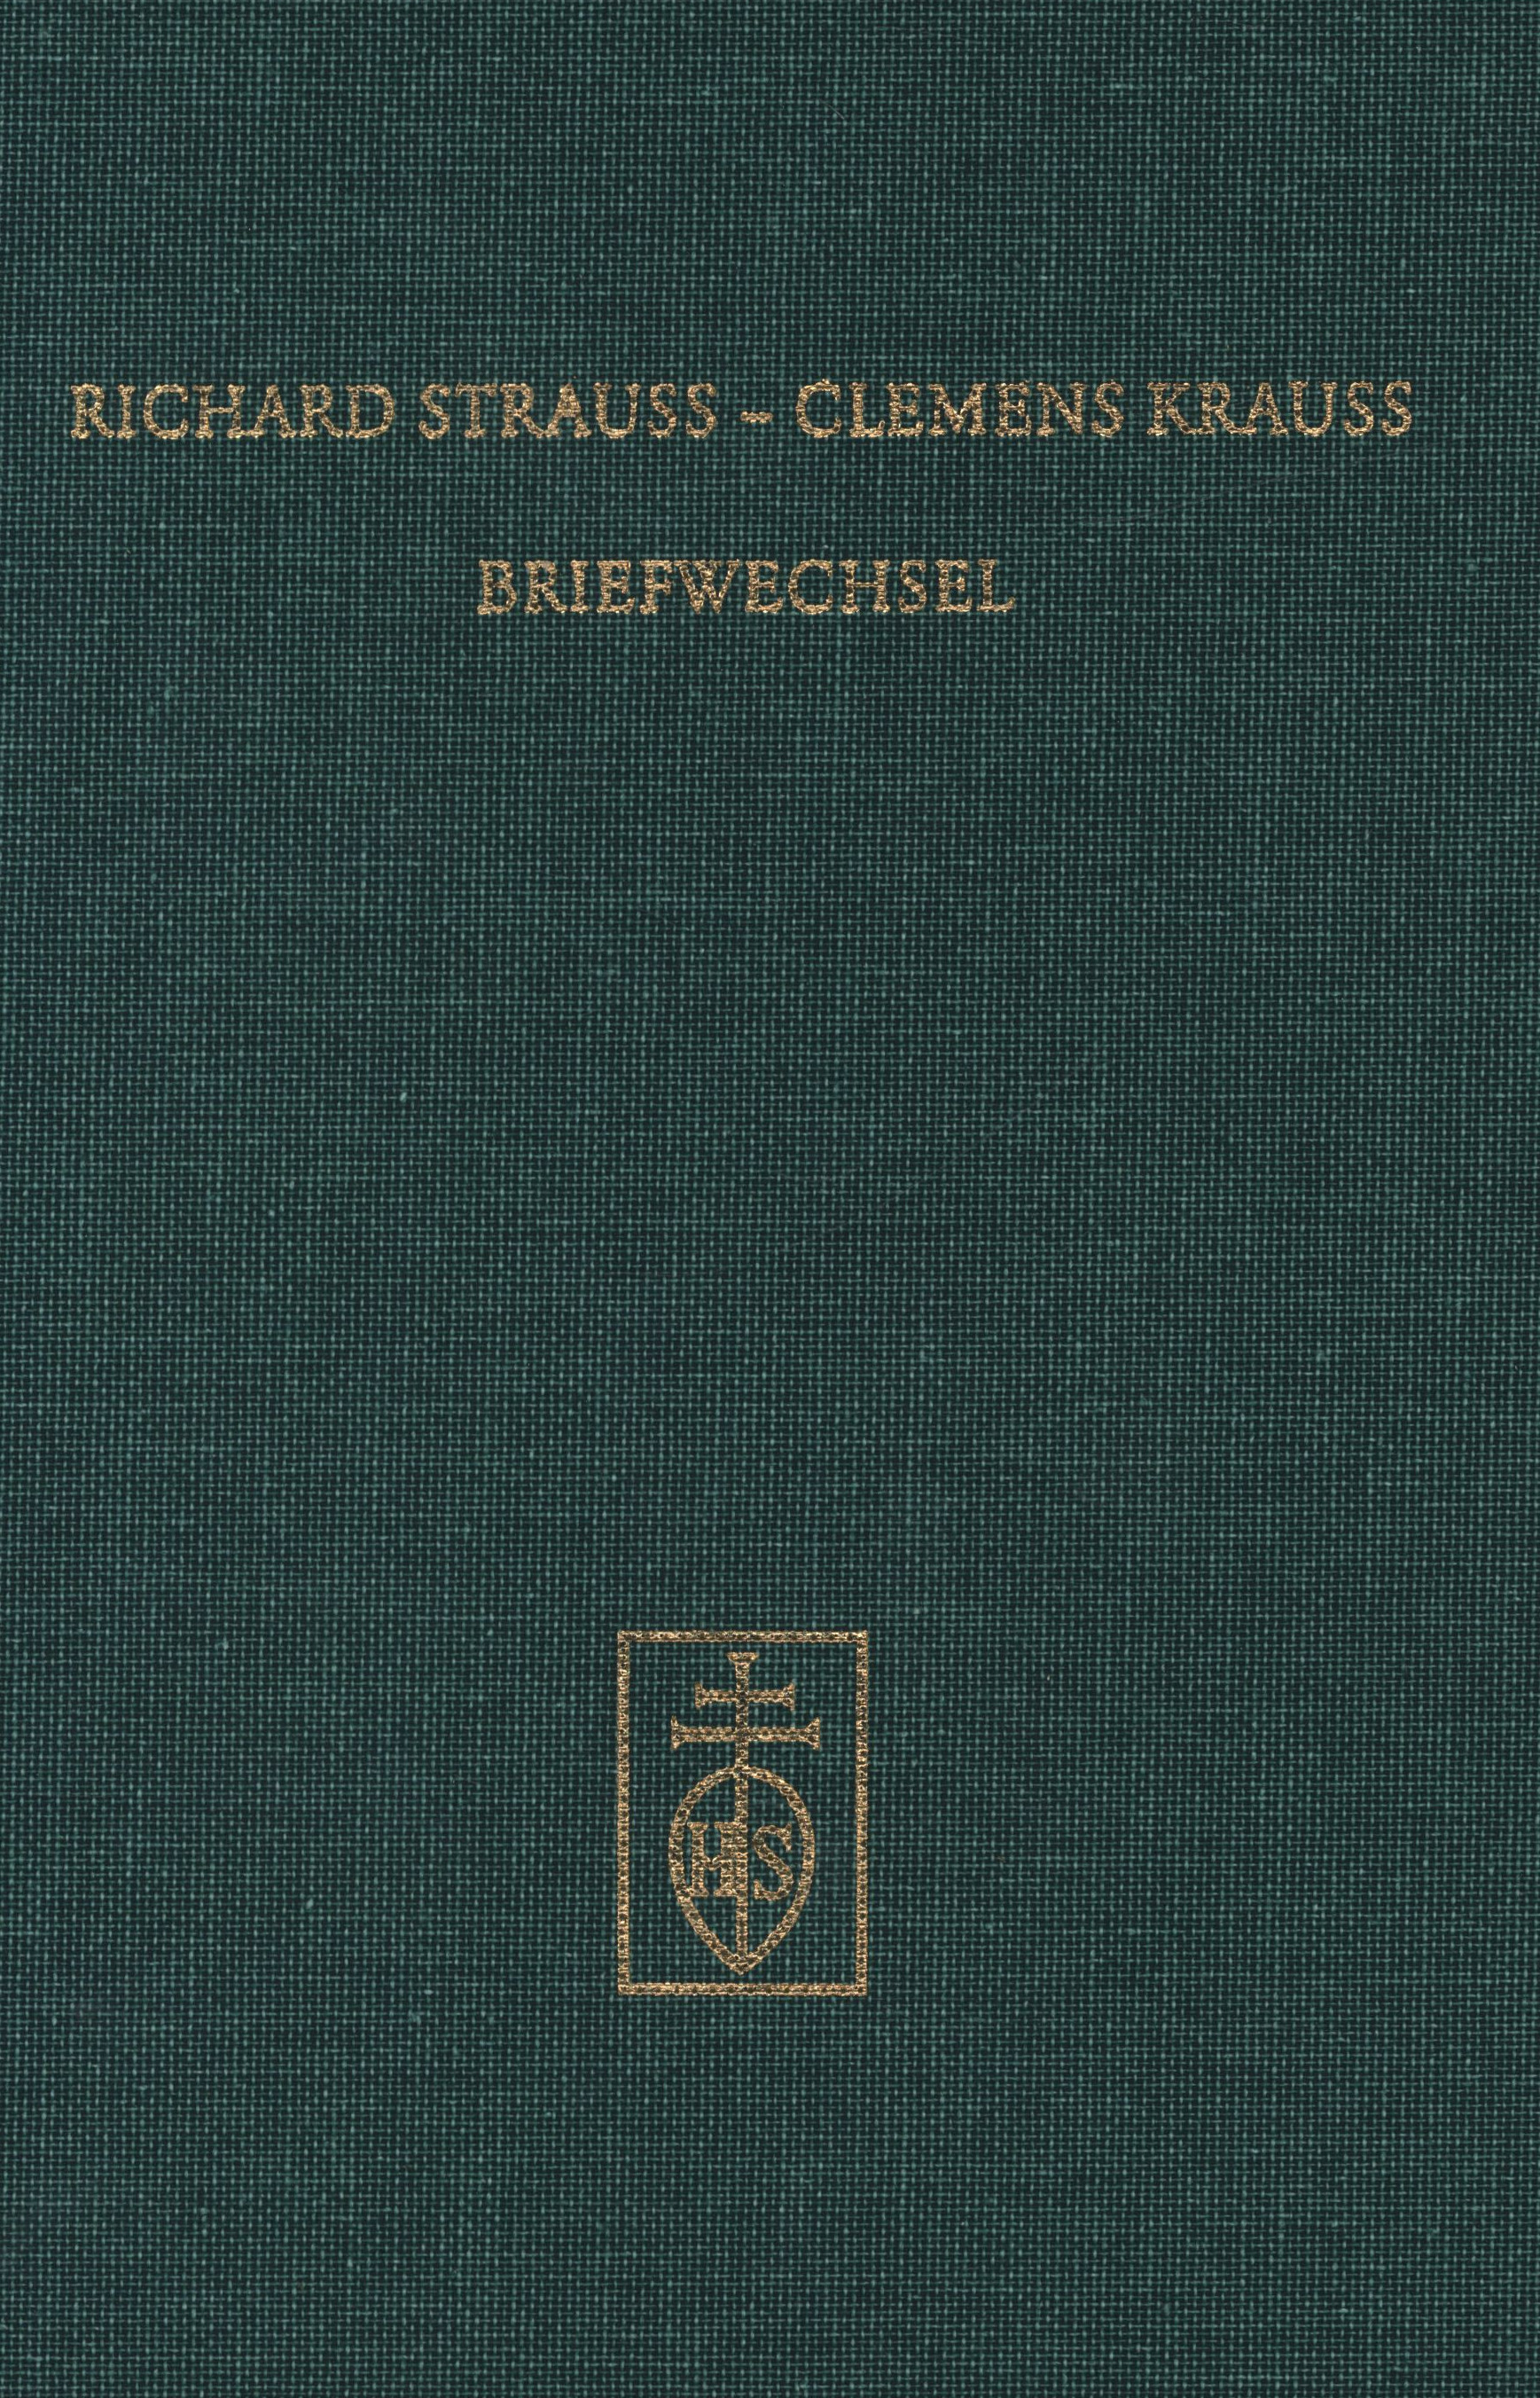 Cover Richard Strauss - Clemens Krauss Briefwechsel